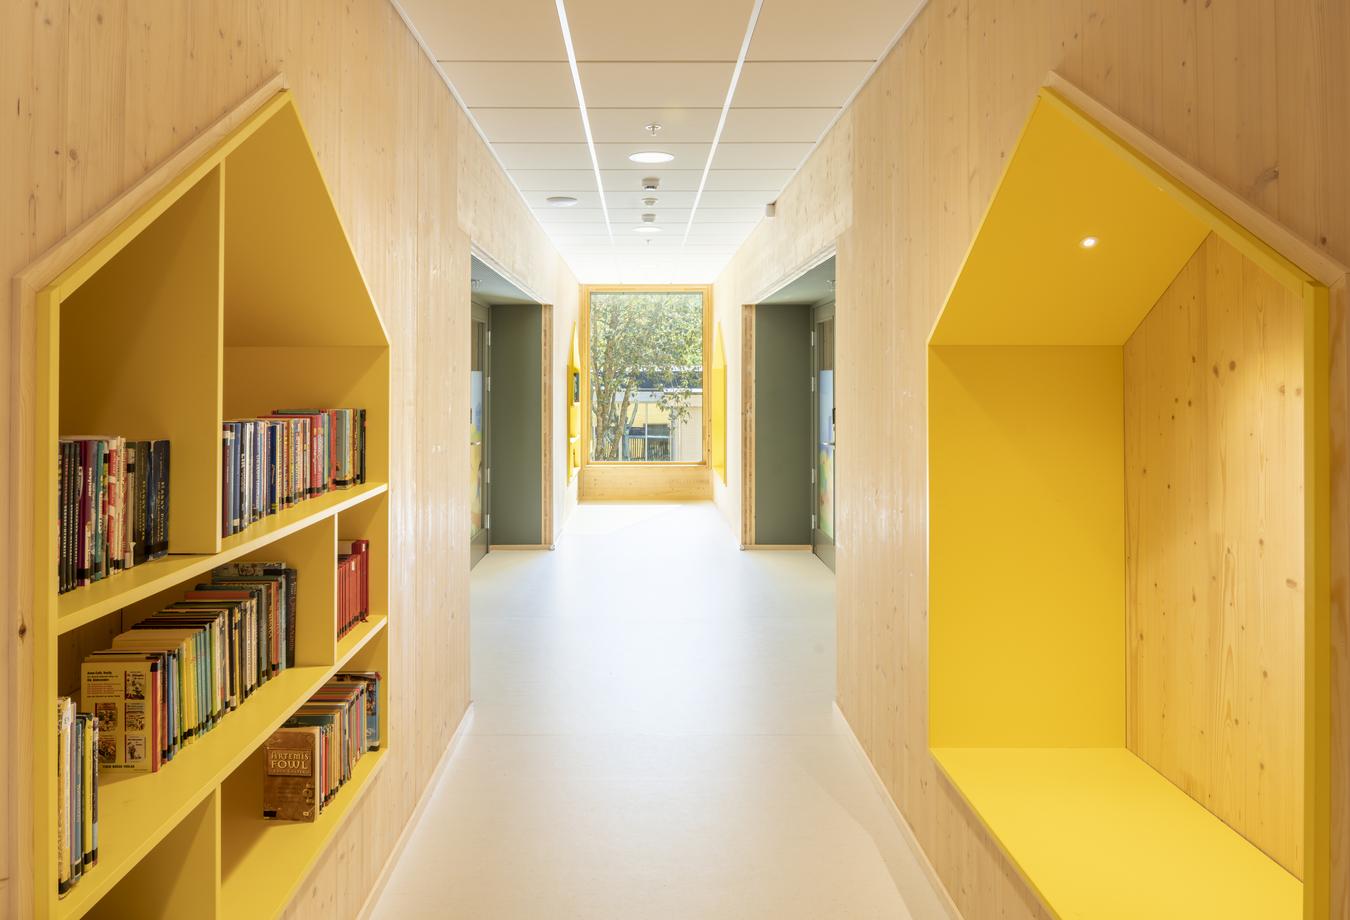 Corridor in wooden materials with yellow bookshelves. Photo